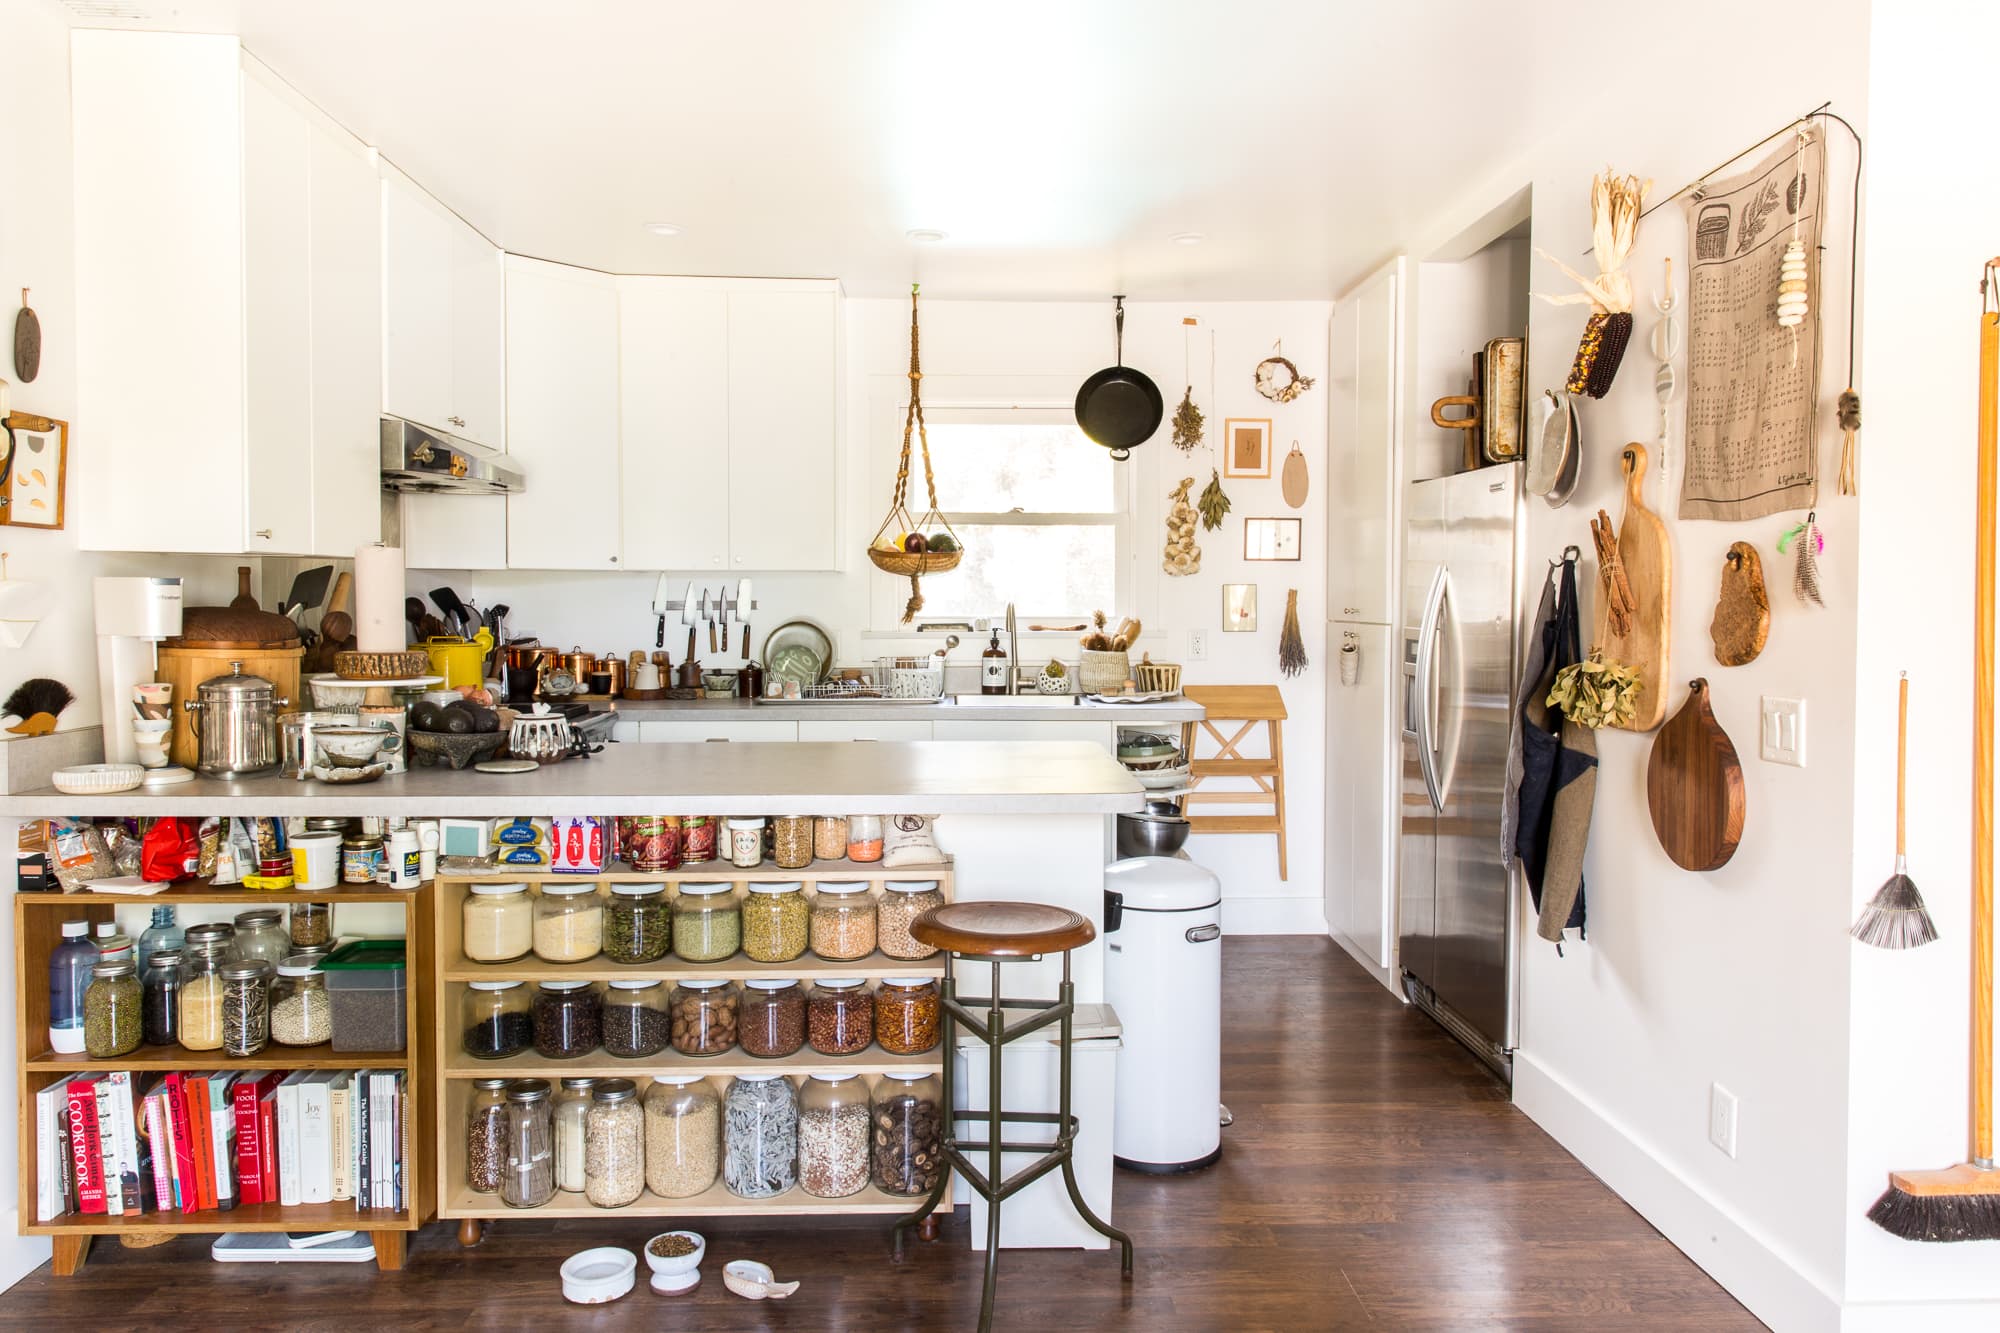 Home Edit Kitchen Organizing Tips